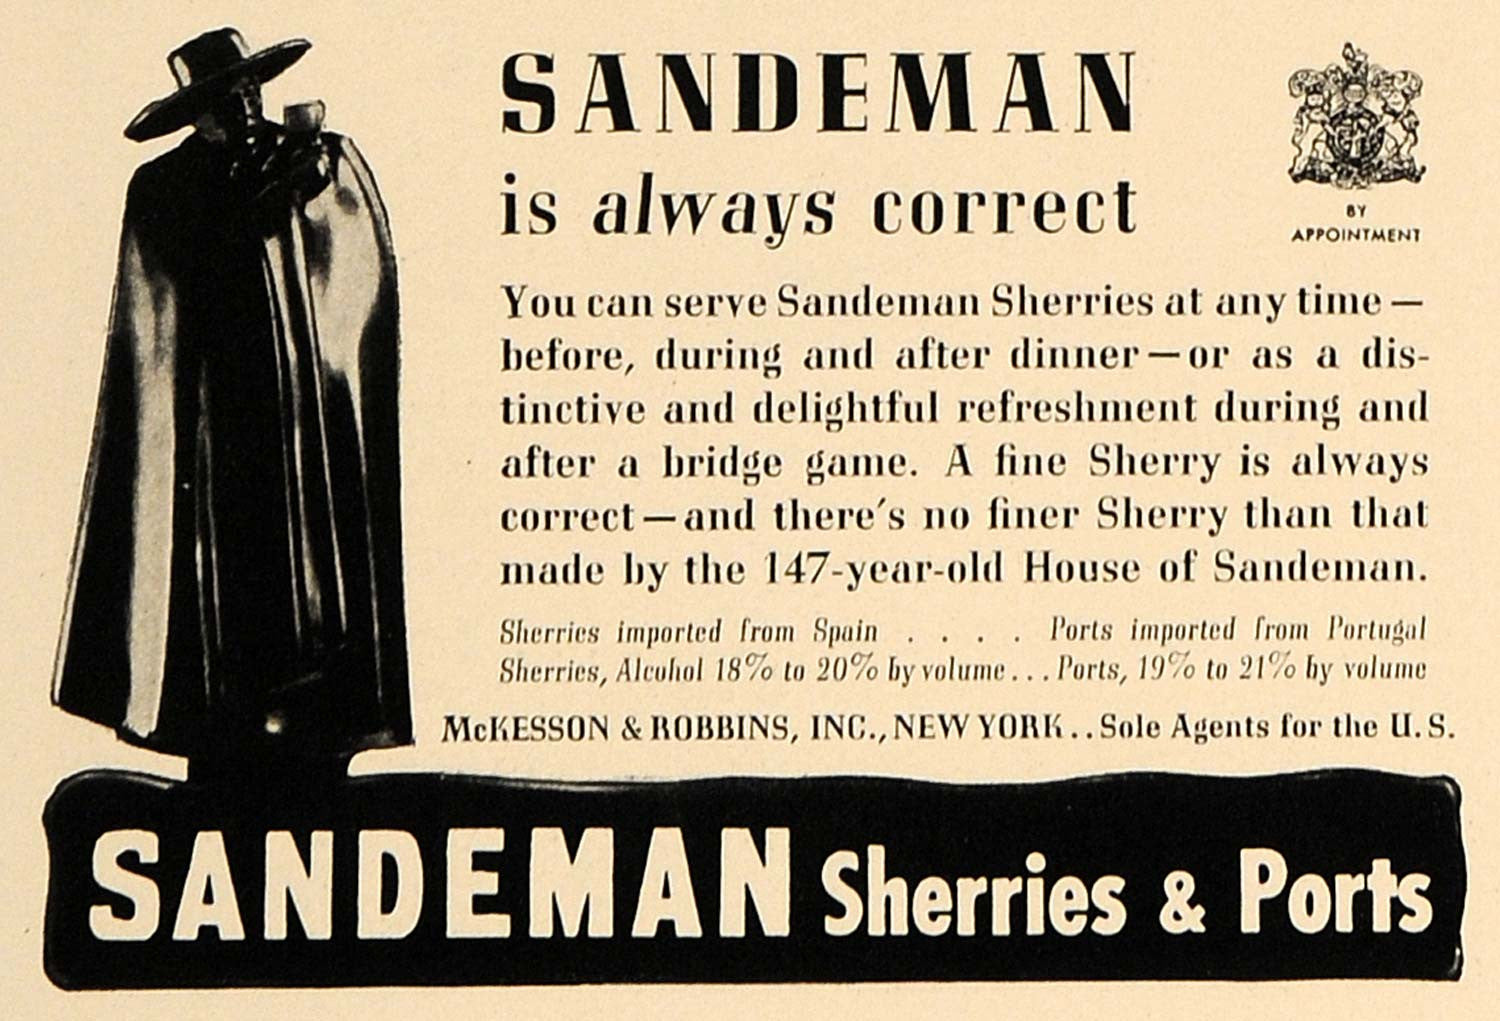 1938 Ad Sandeman Sherries & Port Mckesson & Robbins - ORIGINAL ADVERTISING ESQ1 - Period Paper
